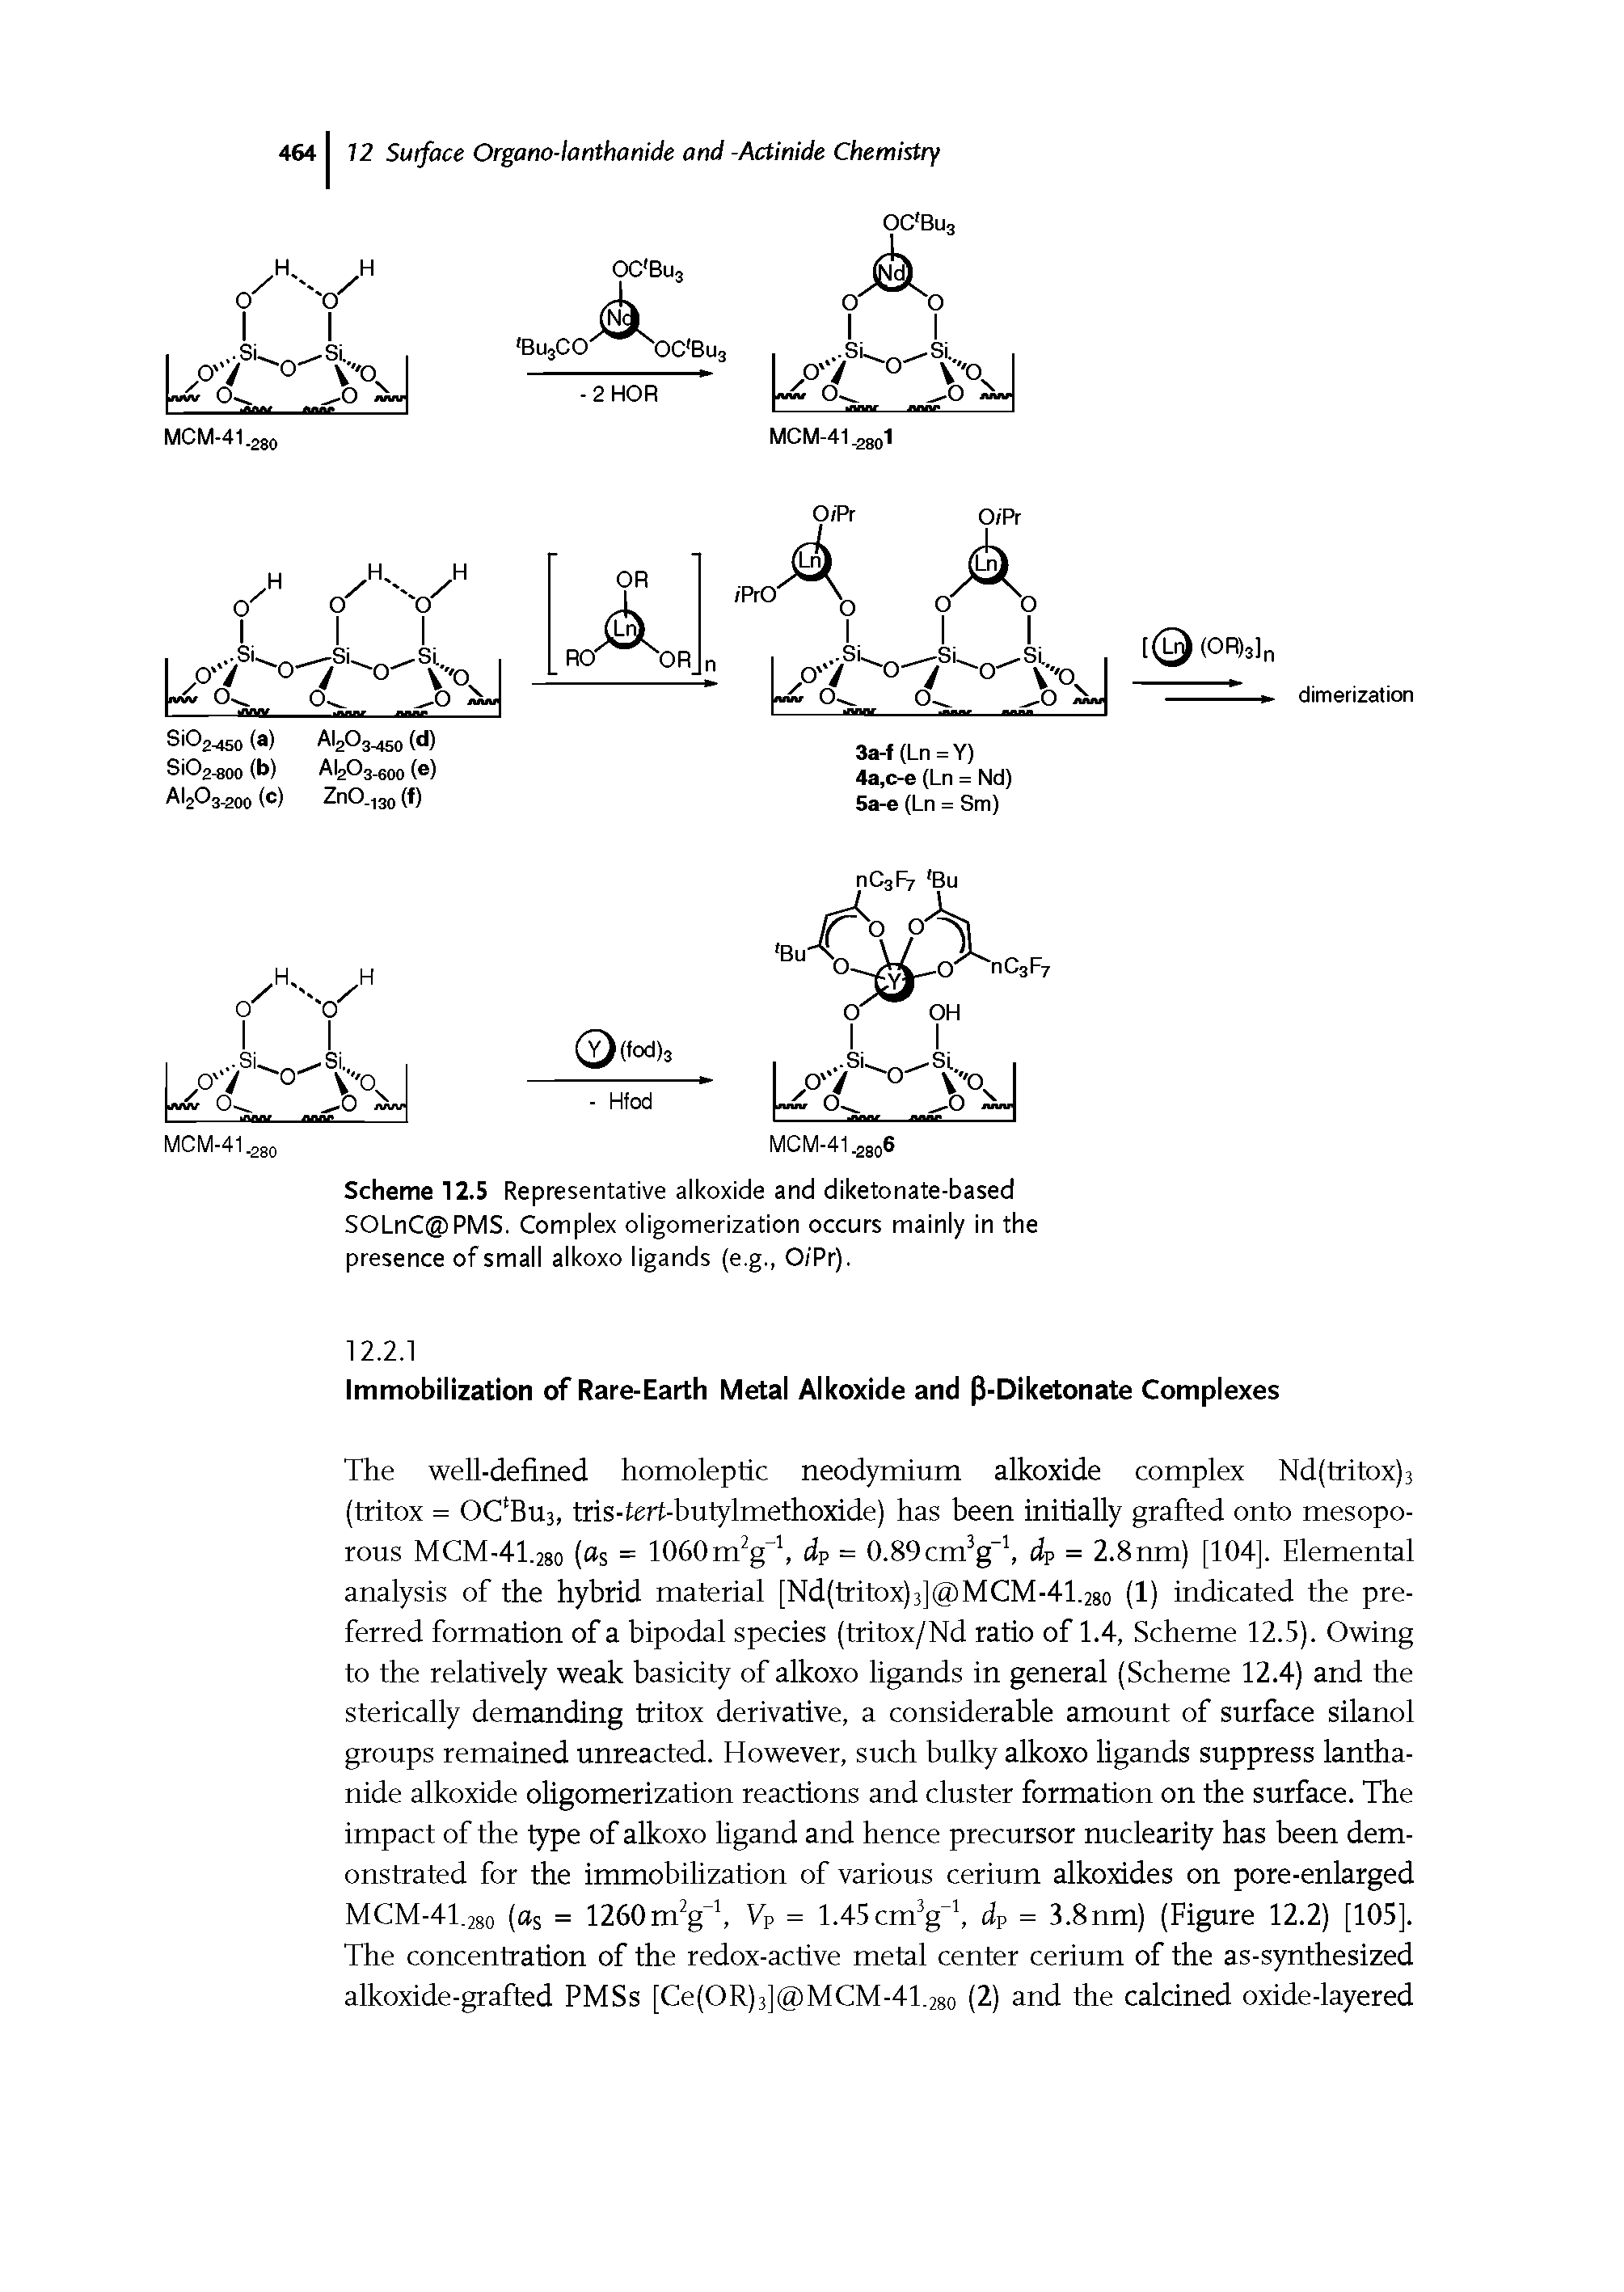 Scheme 12.5 Representative alkoxide and diketonate-based SOLnC PMS. Complex oligomerization occurs mainly in the presence of small alkoxo ligands (e.g., O/Pr).